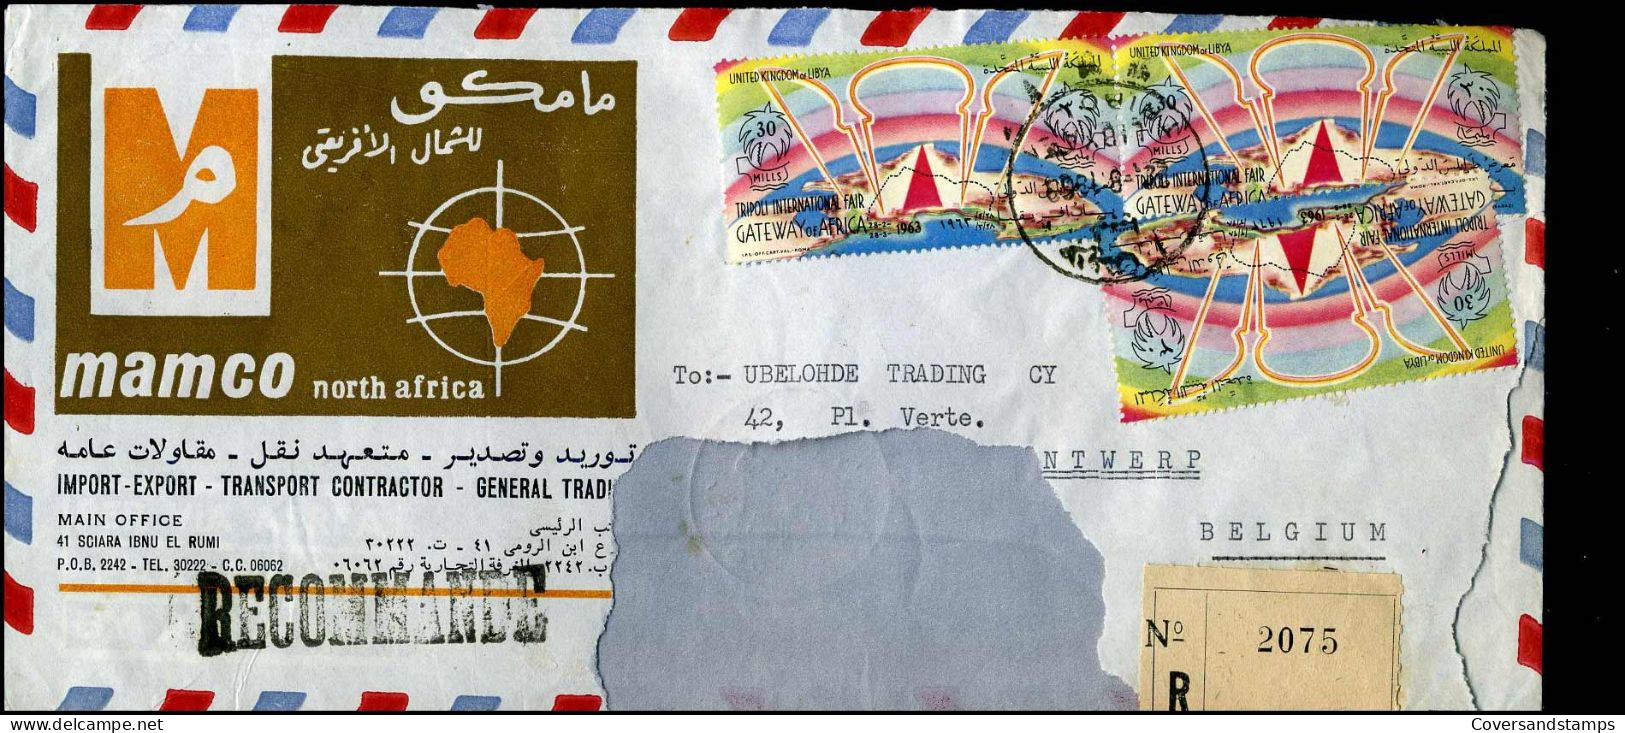 Registered Cover To Antwerp, Belgium - "Mamco North Africa, Import-export" - Libya